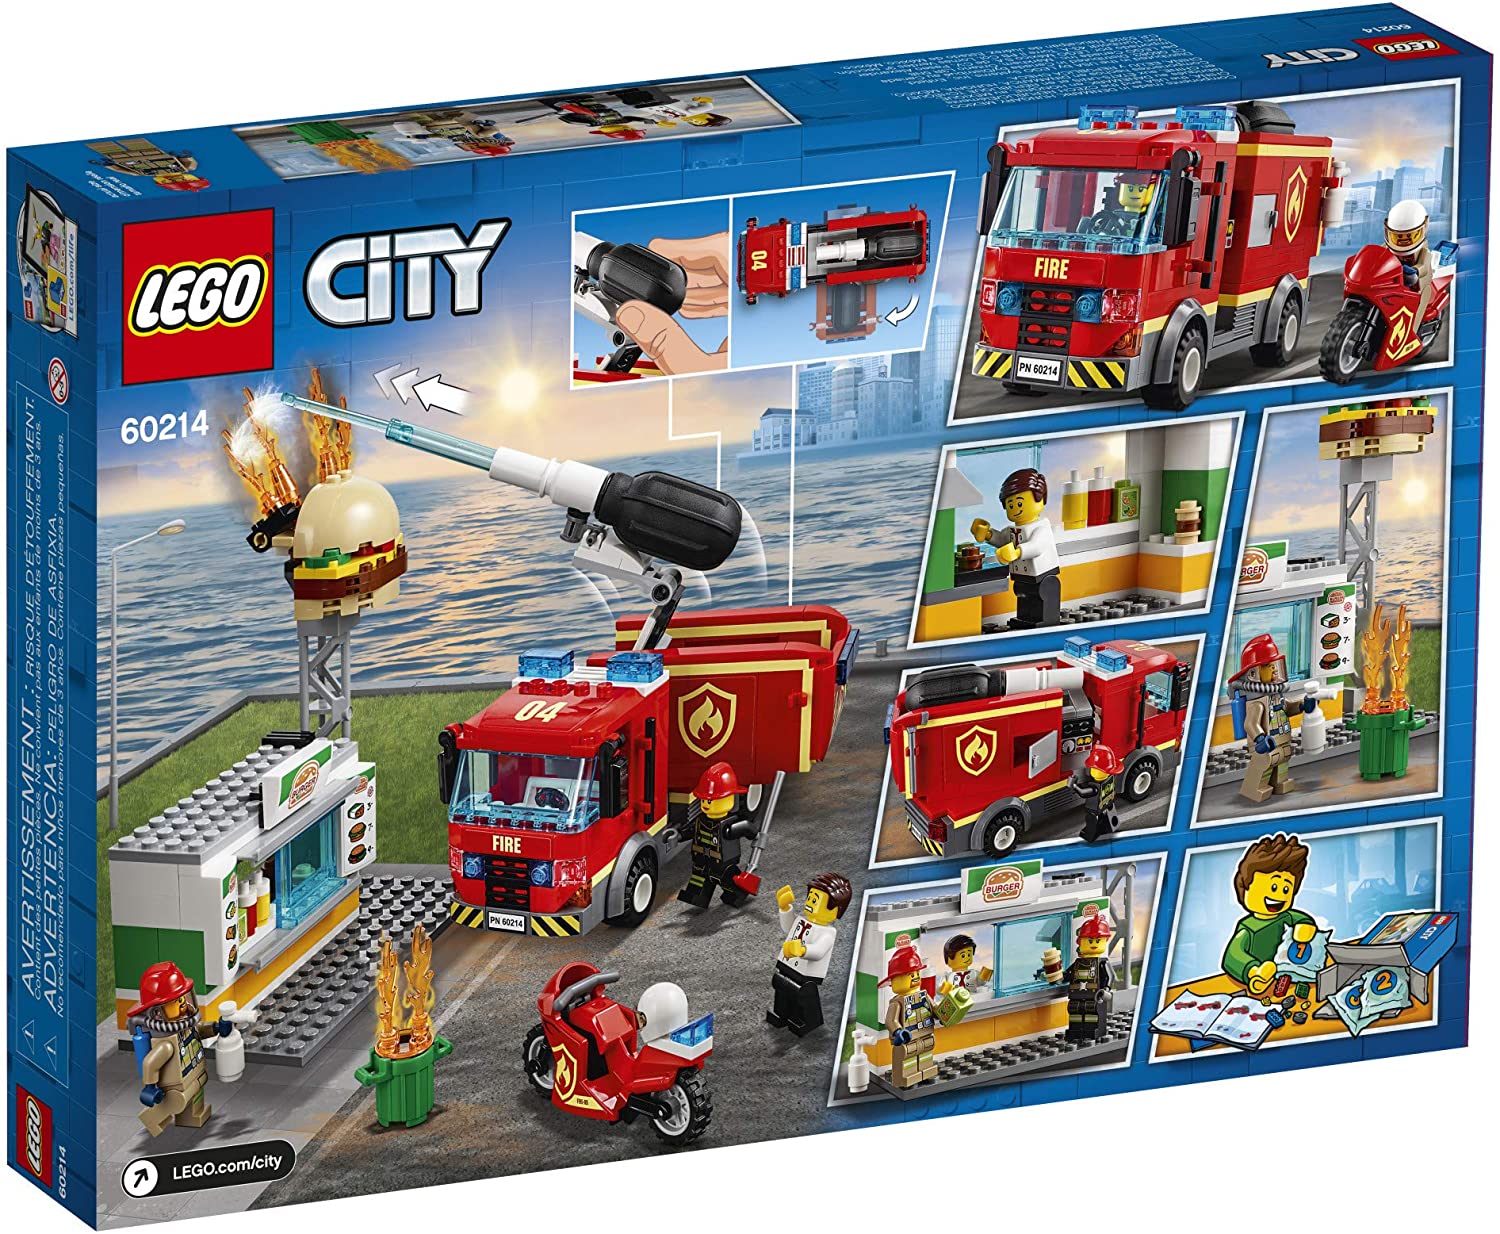 LEGO® CITY 60214 Burger Bar Rescue pieces) – AESOP'S FABLE